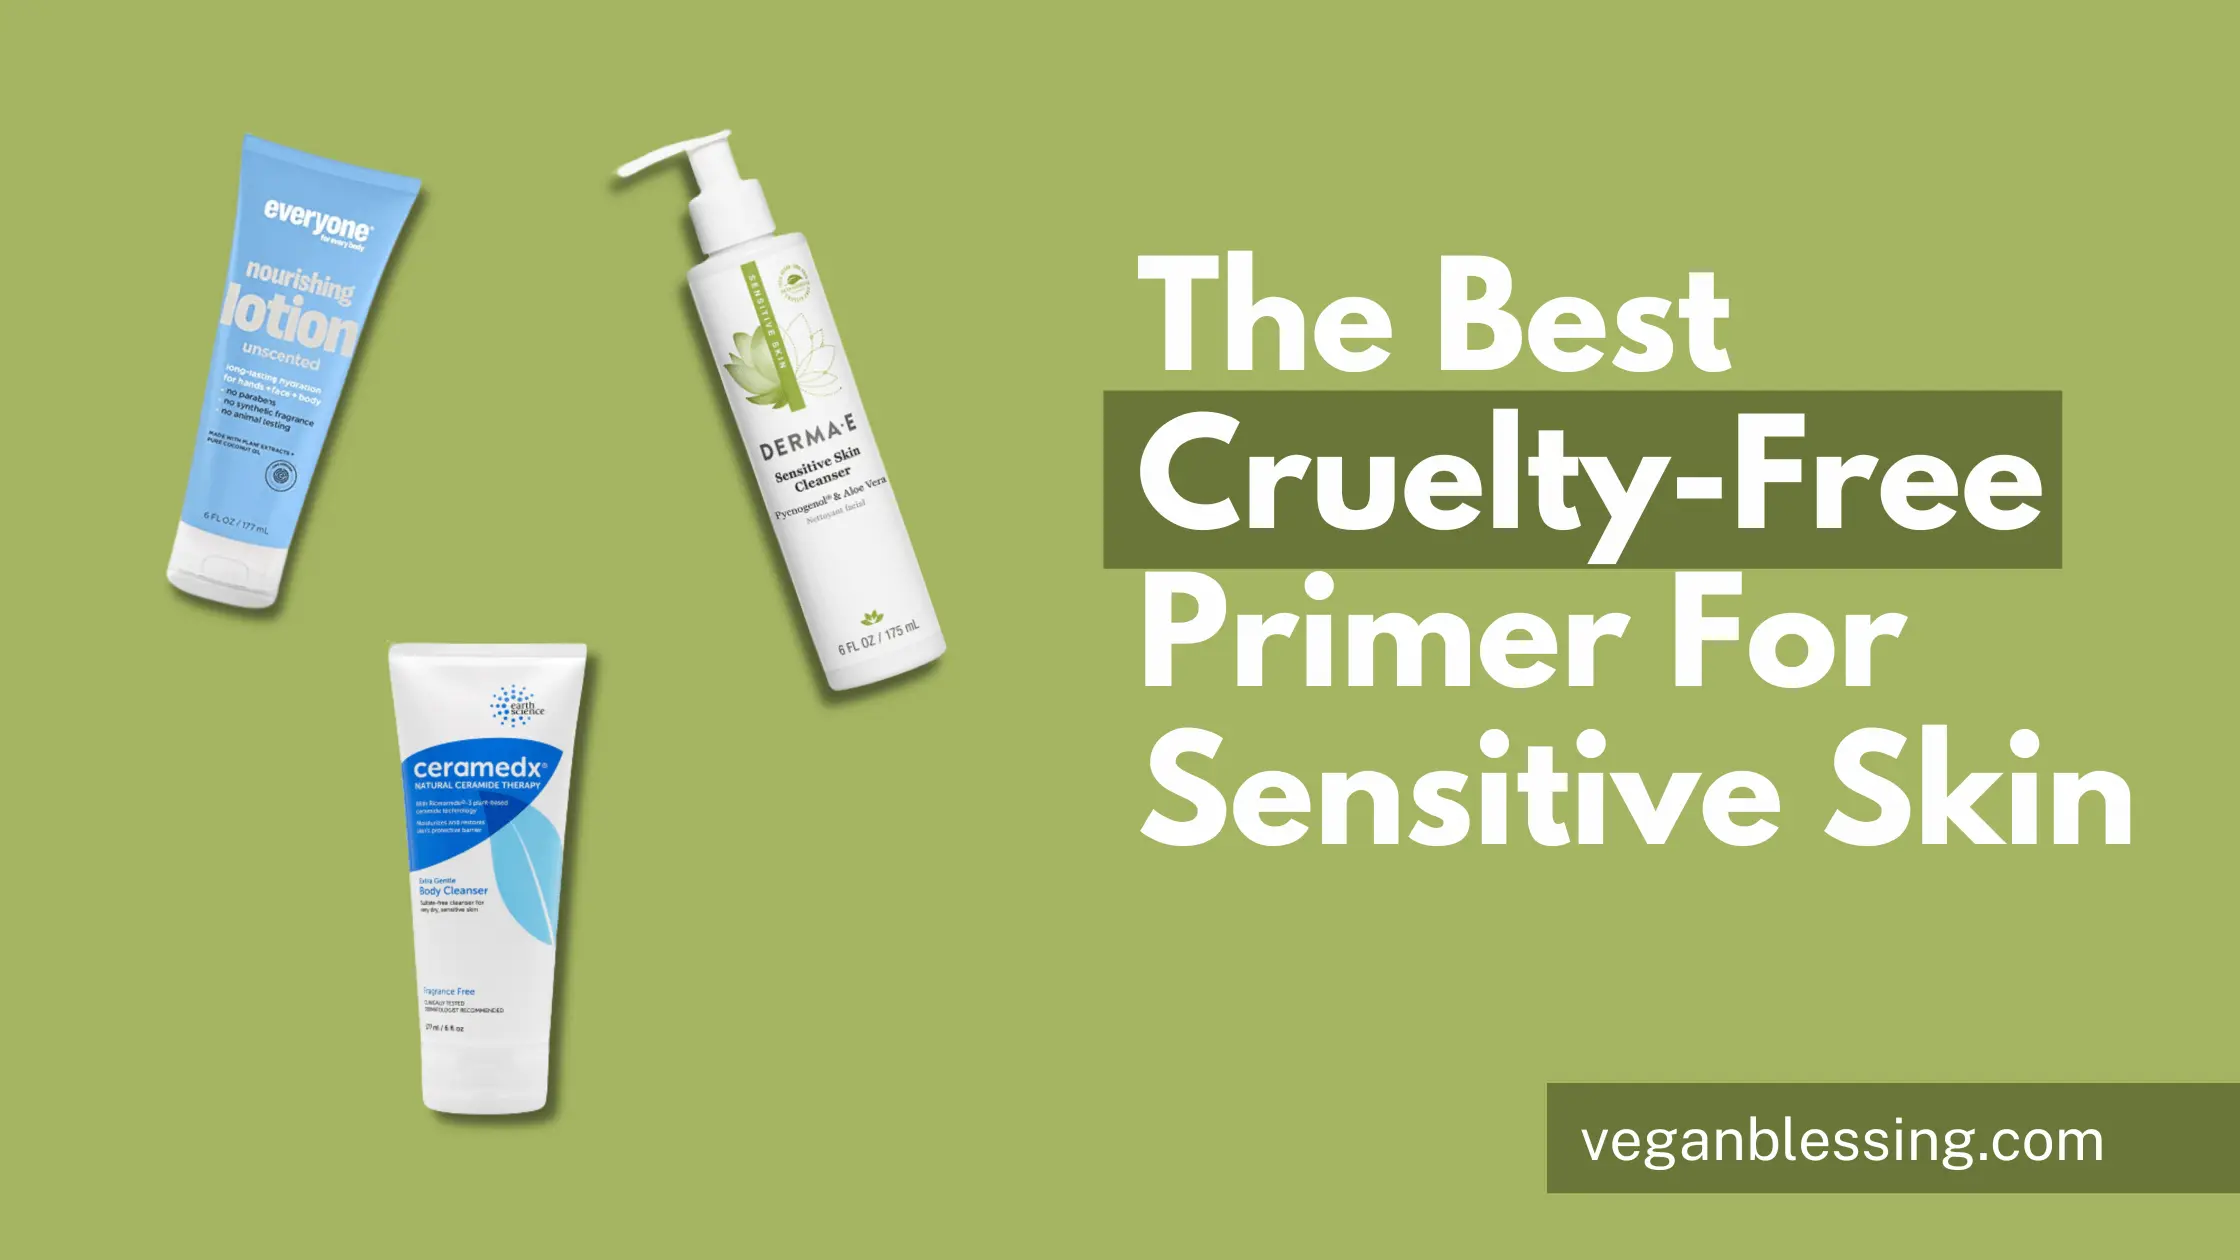 The Best Cruelty-Free Primer For Sensitive Skin